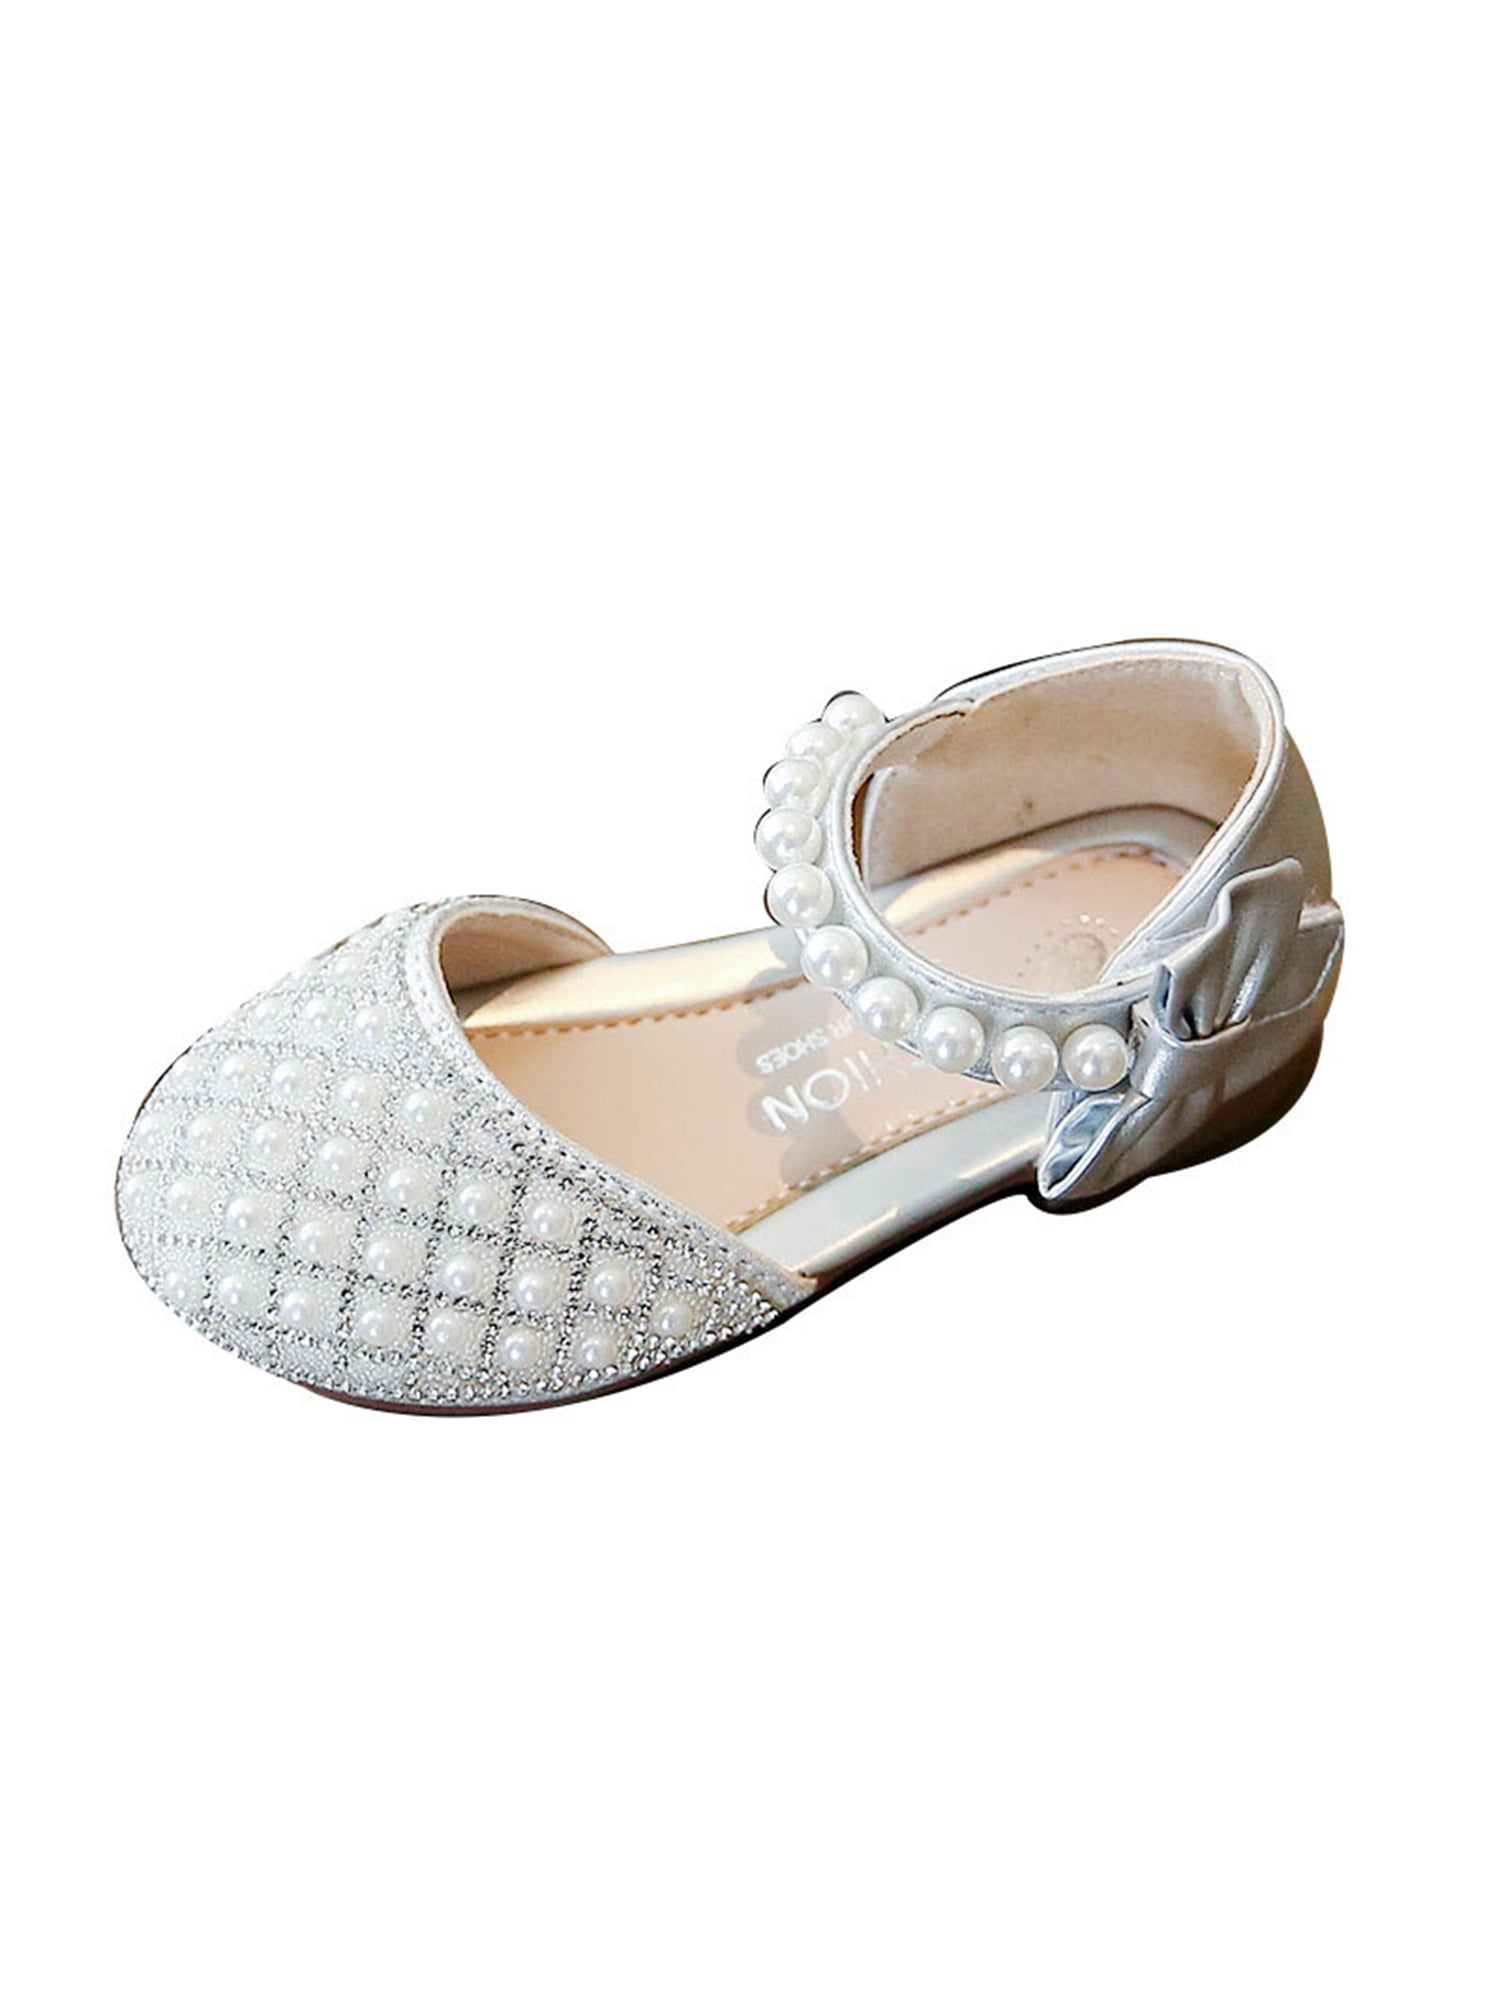 K KomForme Toddler Girls Flat Shoes Non-Slip Soft Ballet Mary Jane ...